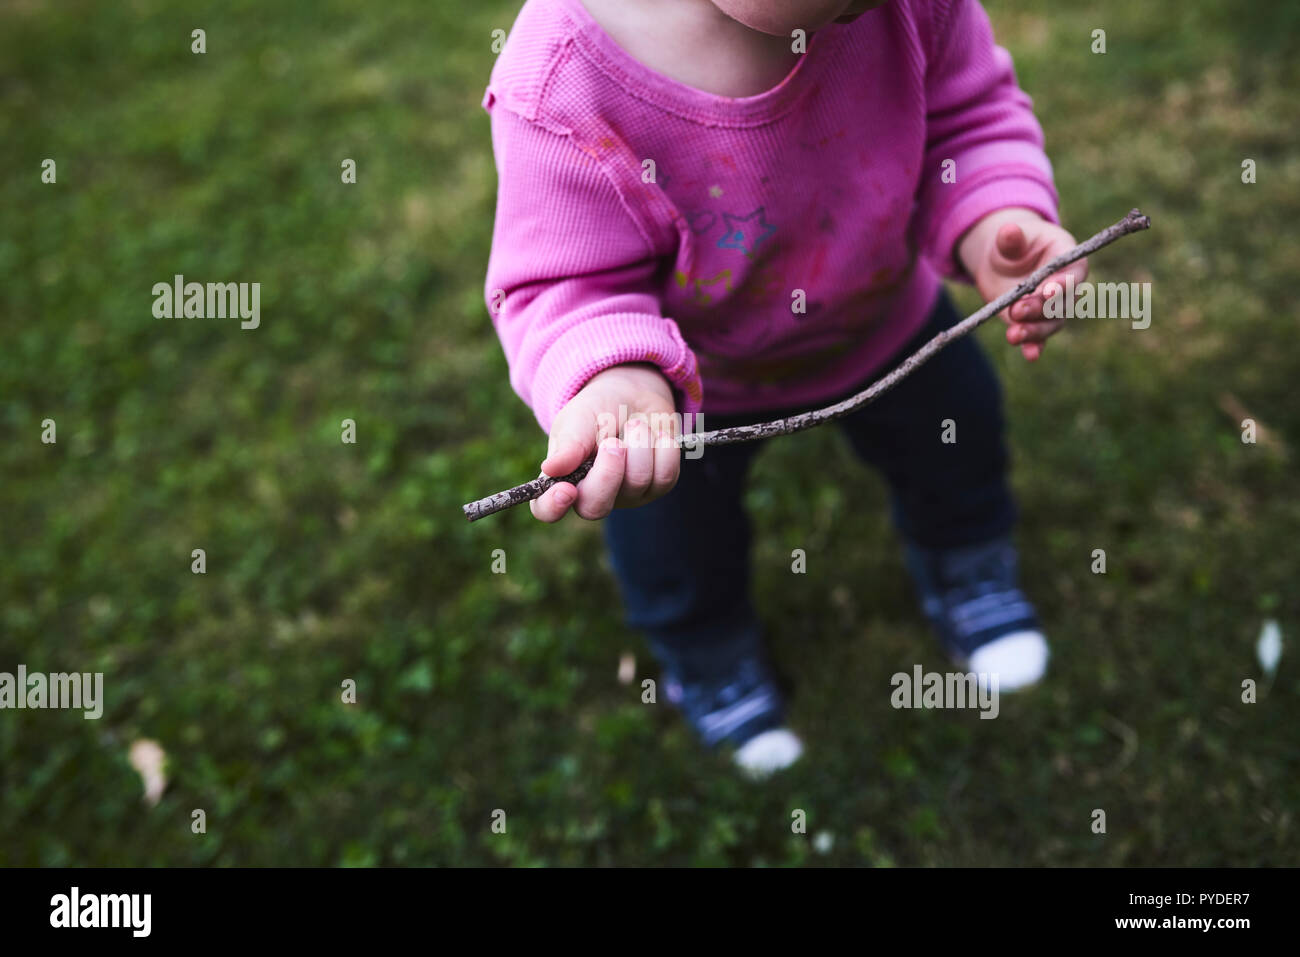 Toddler girl exploring a grass field wearing a pink shirt Stock Photo